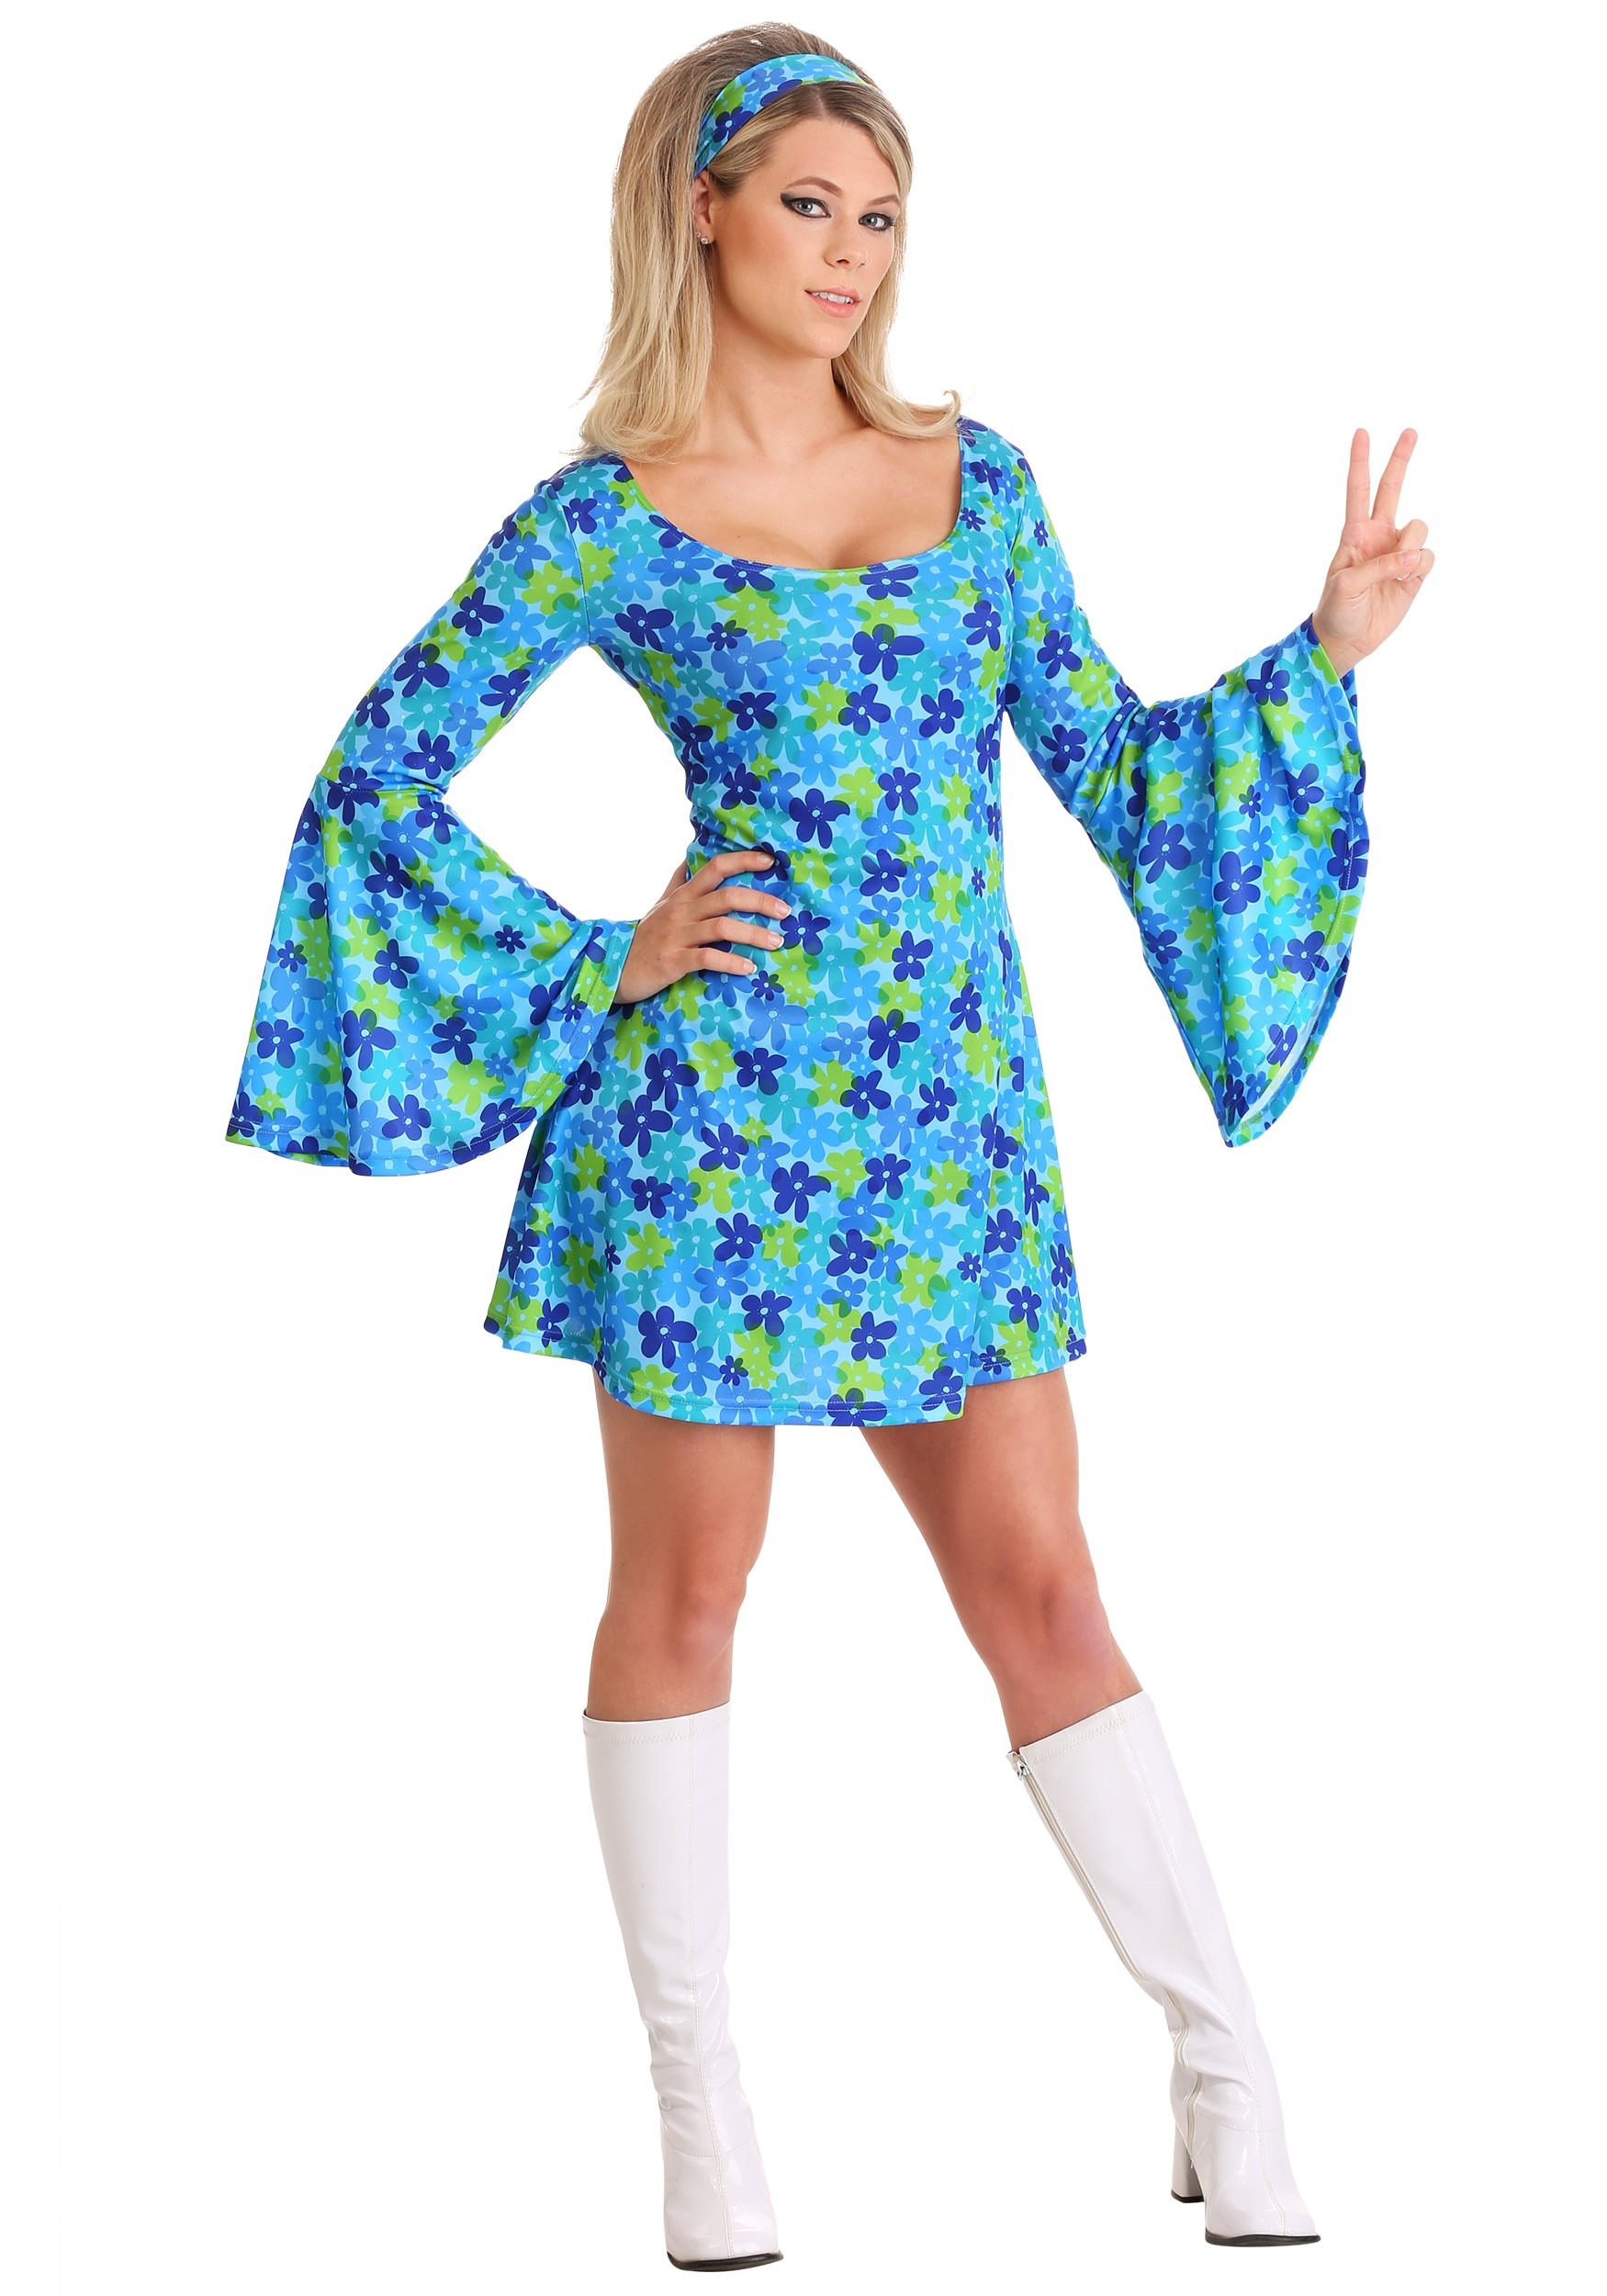 Photos - Fancy Dress Winsun Dress FUN Costumes Plus Size Wild Flower 70's Hippie Dress Costume for Women Gre 